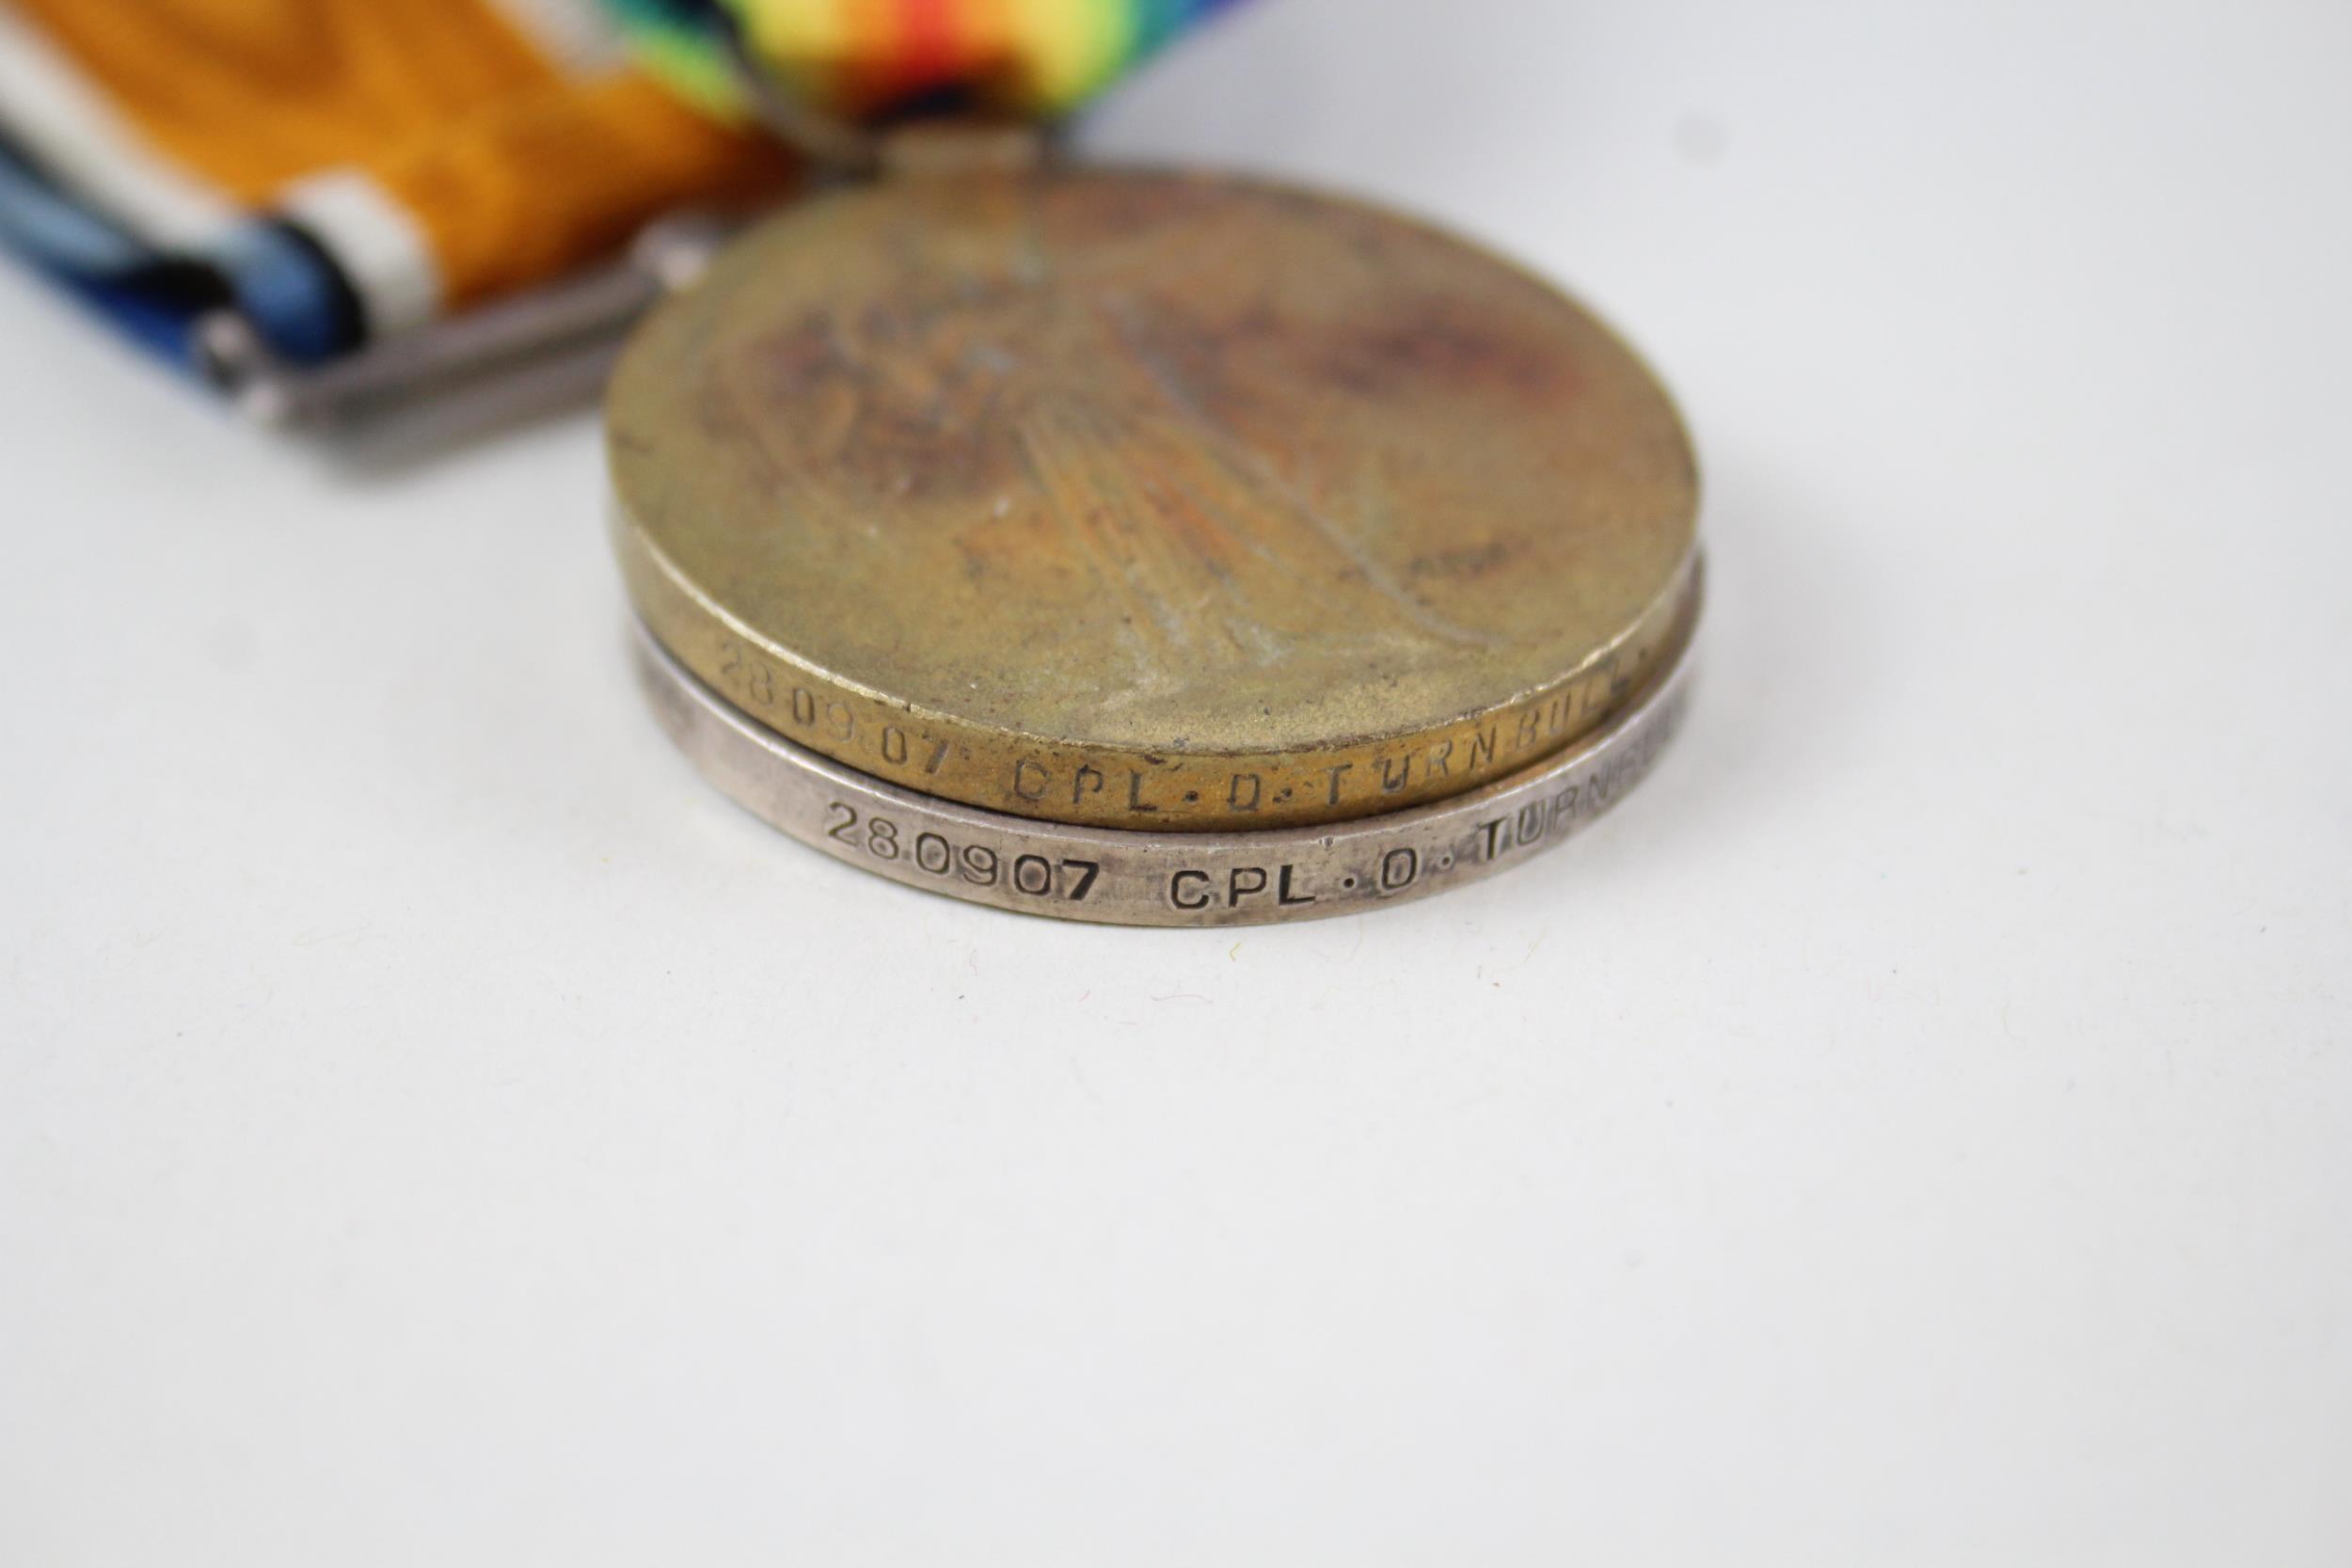 WW1 Medal Pair Named 280907 cpl O. Turnbull H.L.I - WW1 Medal Pair Named 280907 cpl O. Turnbull H. - Image 5 of 6